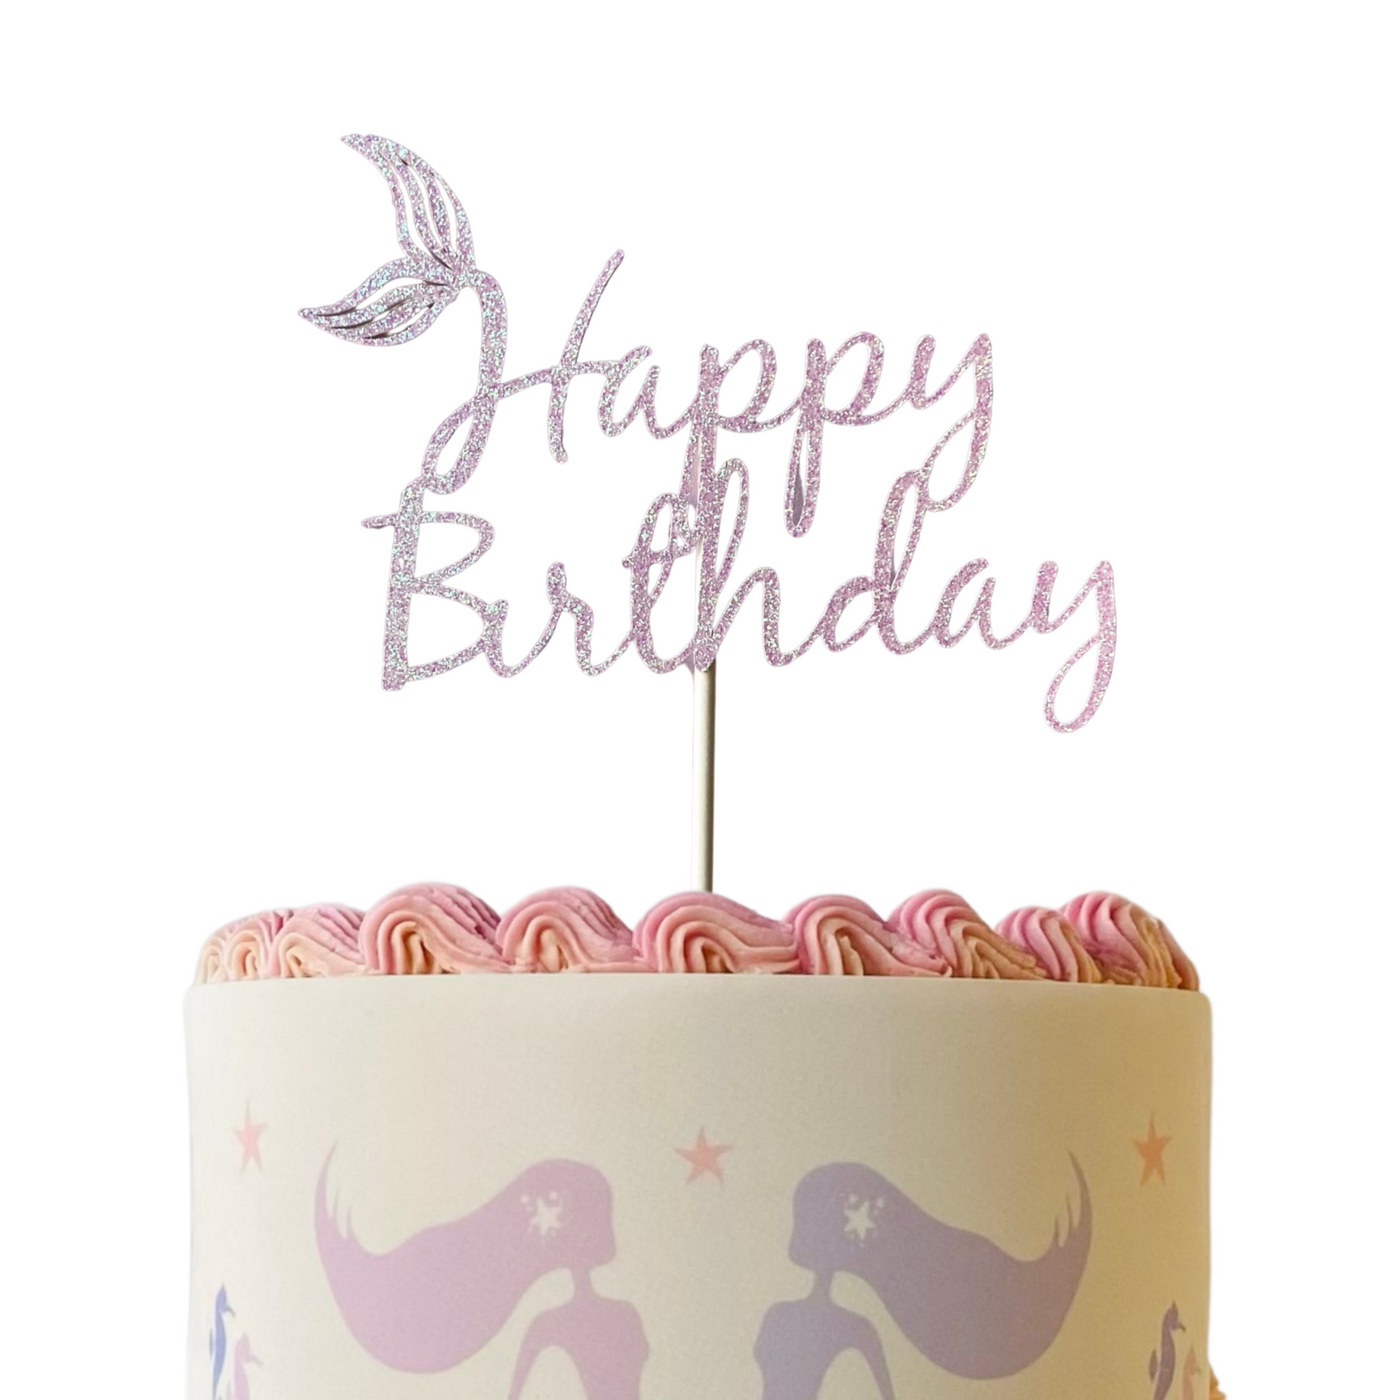 Happy Birthday Cake Topper, mermaid theme